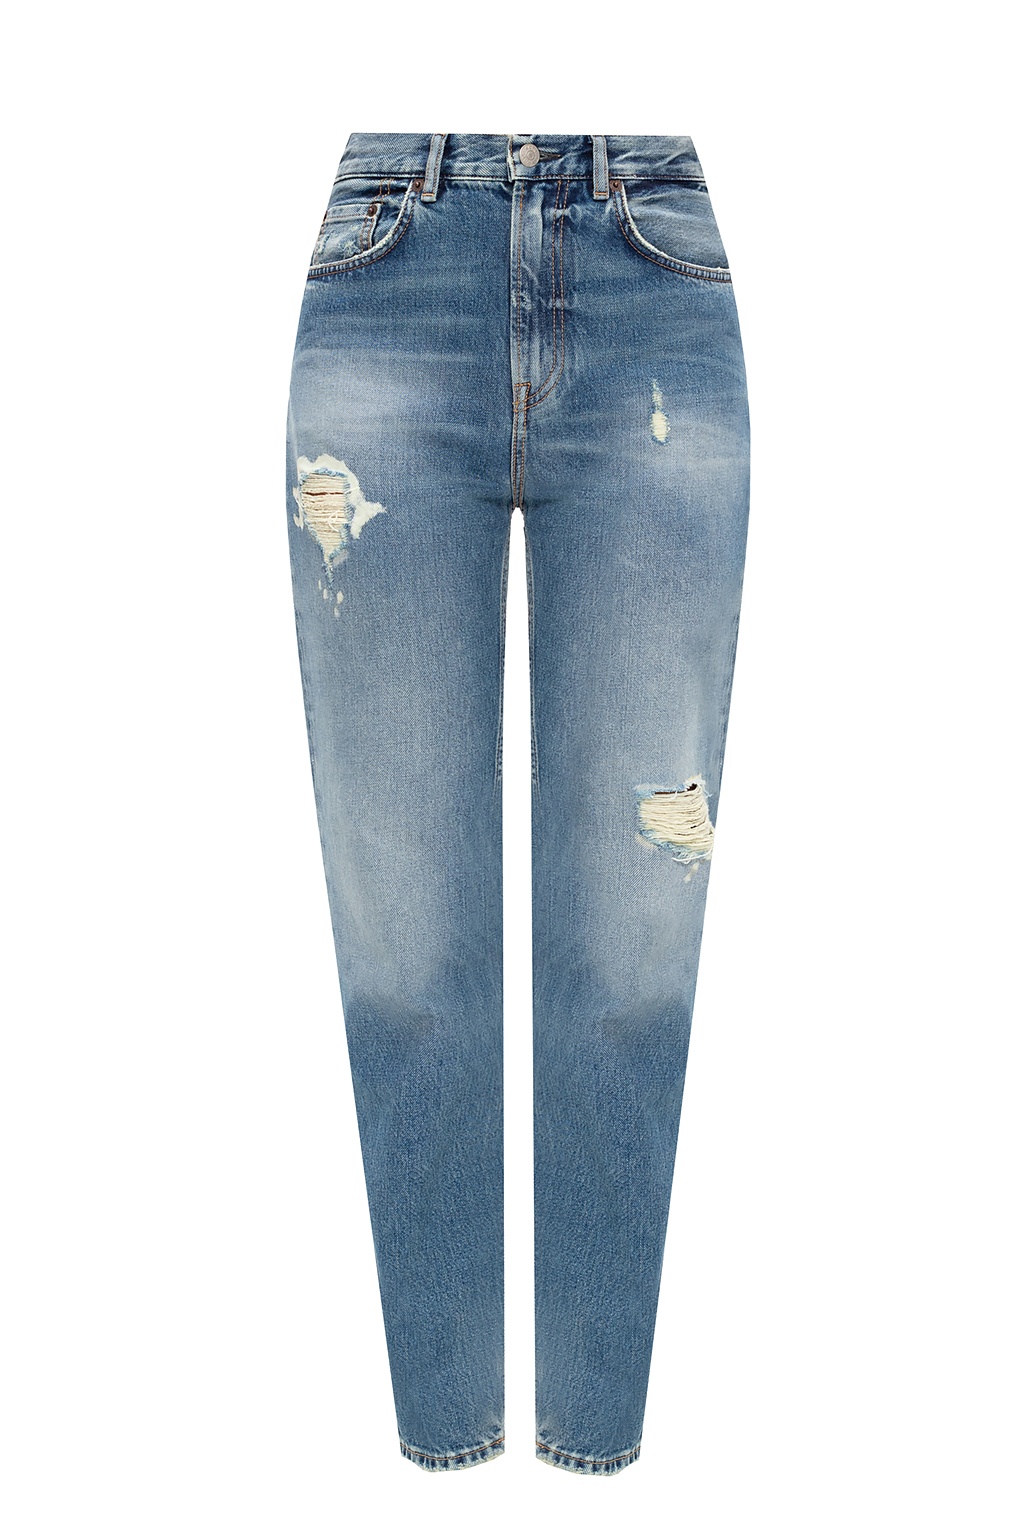 Acne Studios Distressed jeans | Women's Clothing | Vitkac